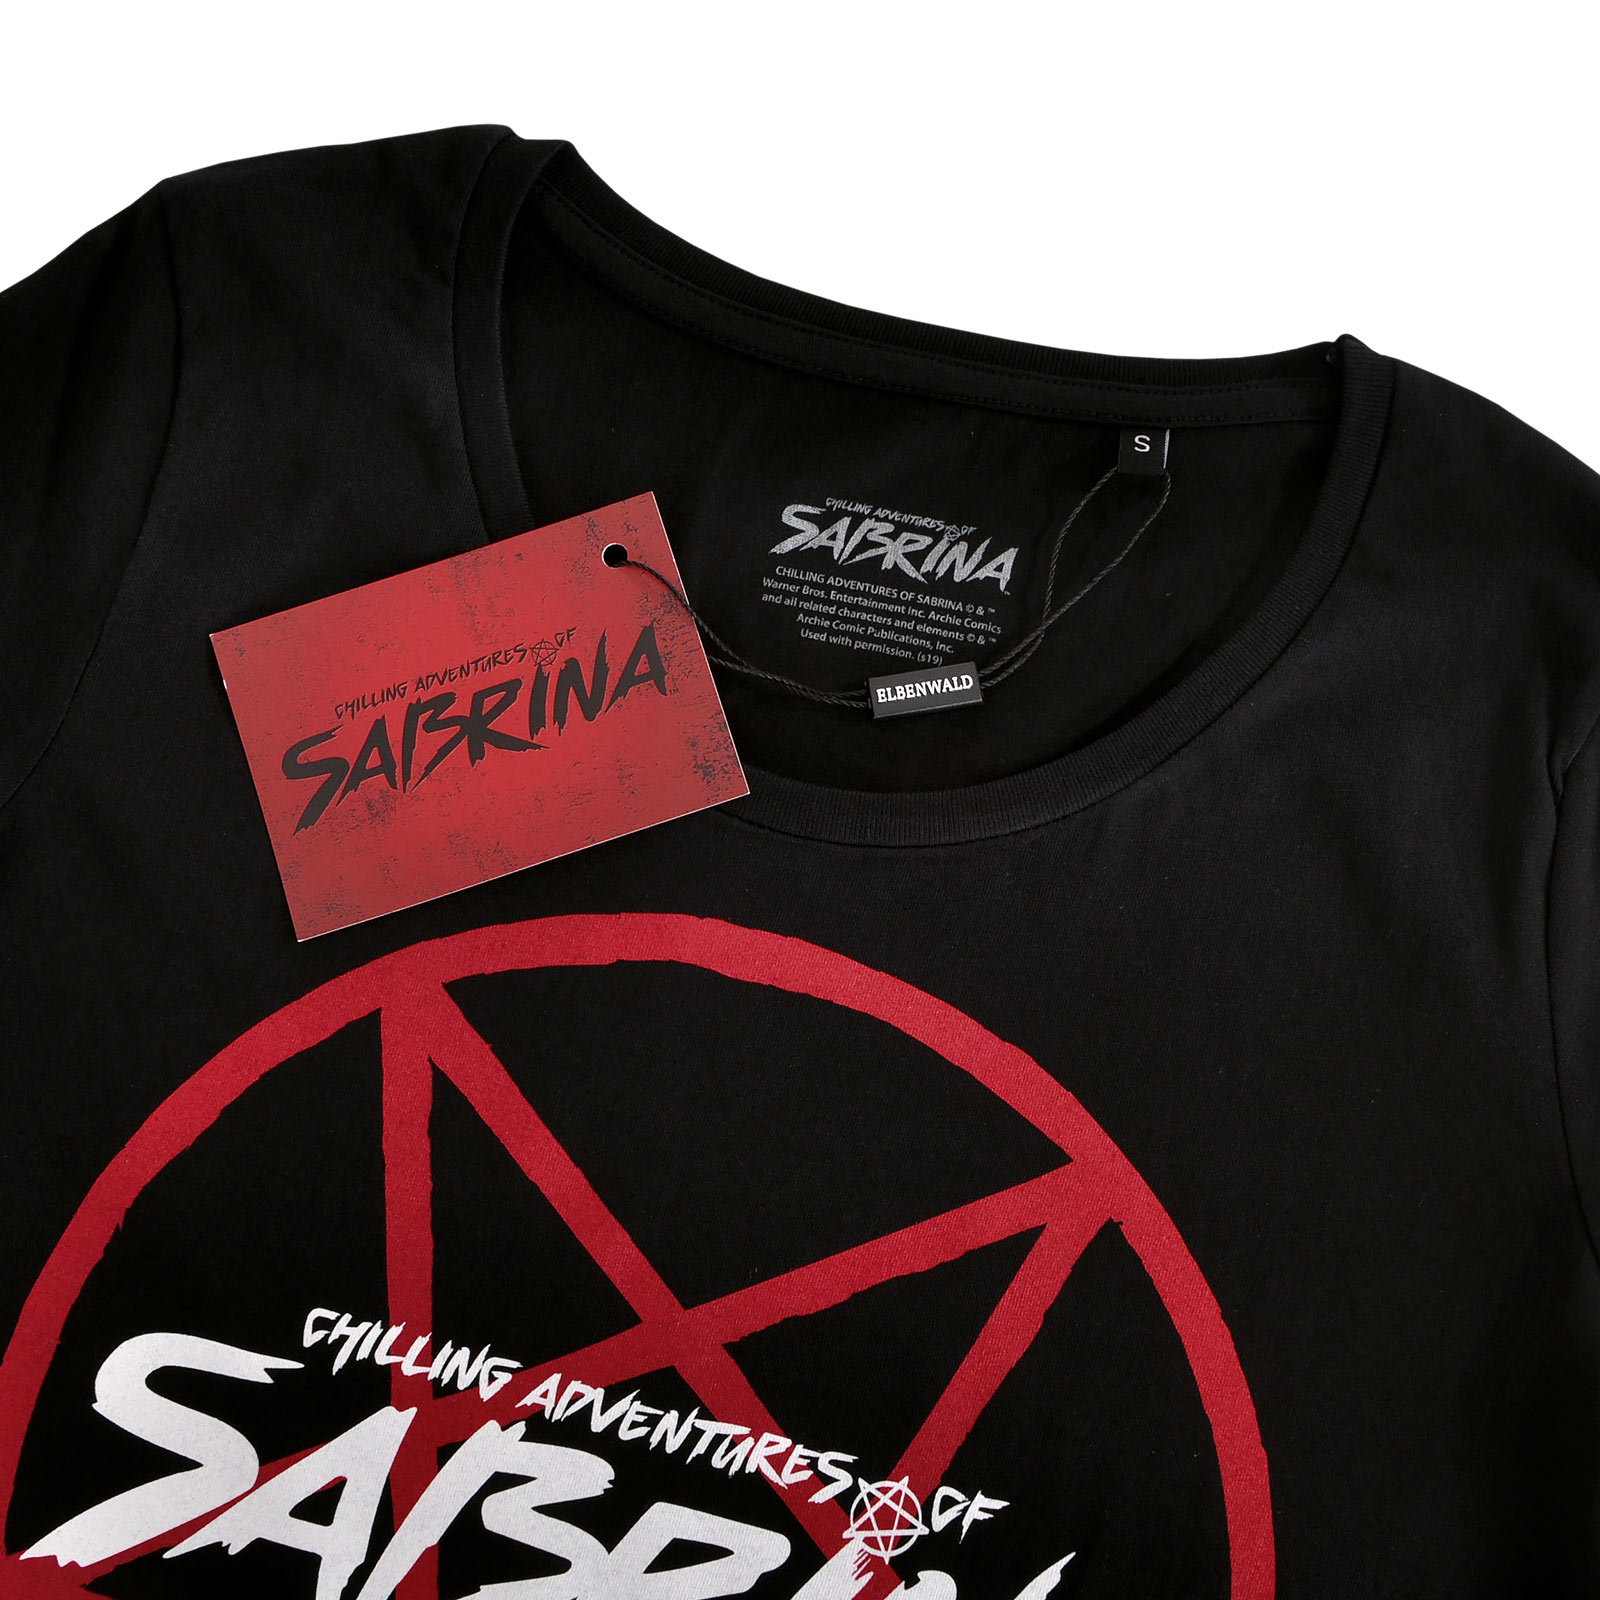 Chilling Adventures of Sabrina - Logo T-Shirt Damen schwarz